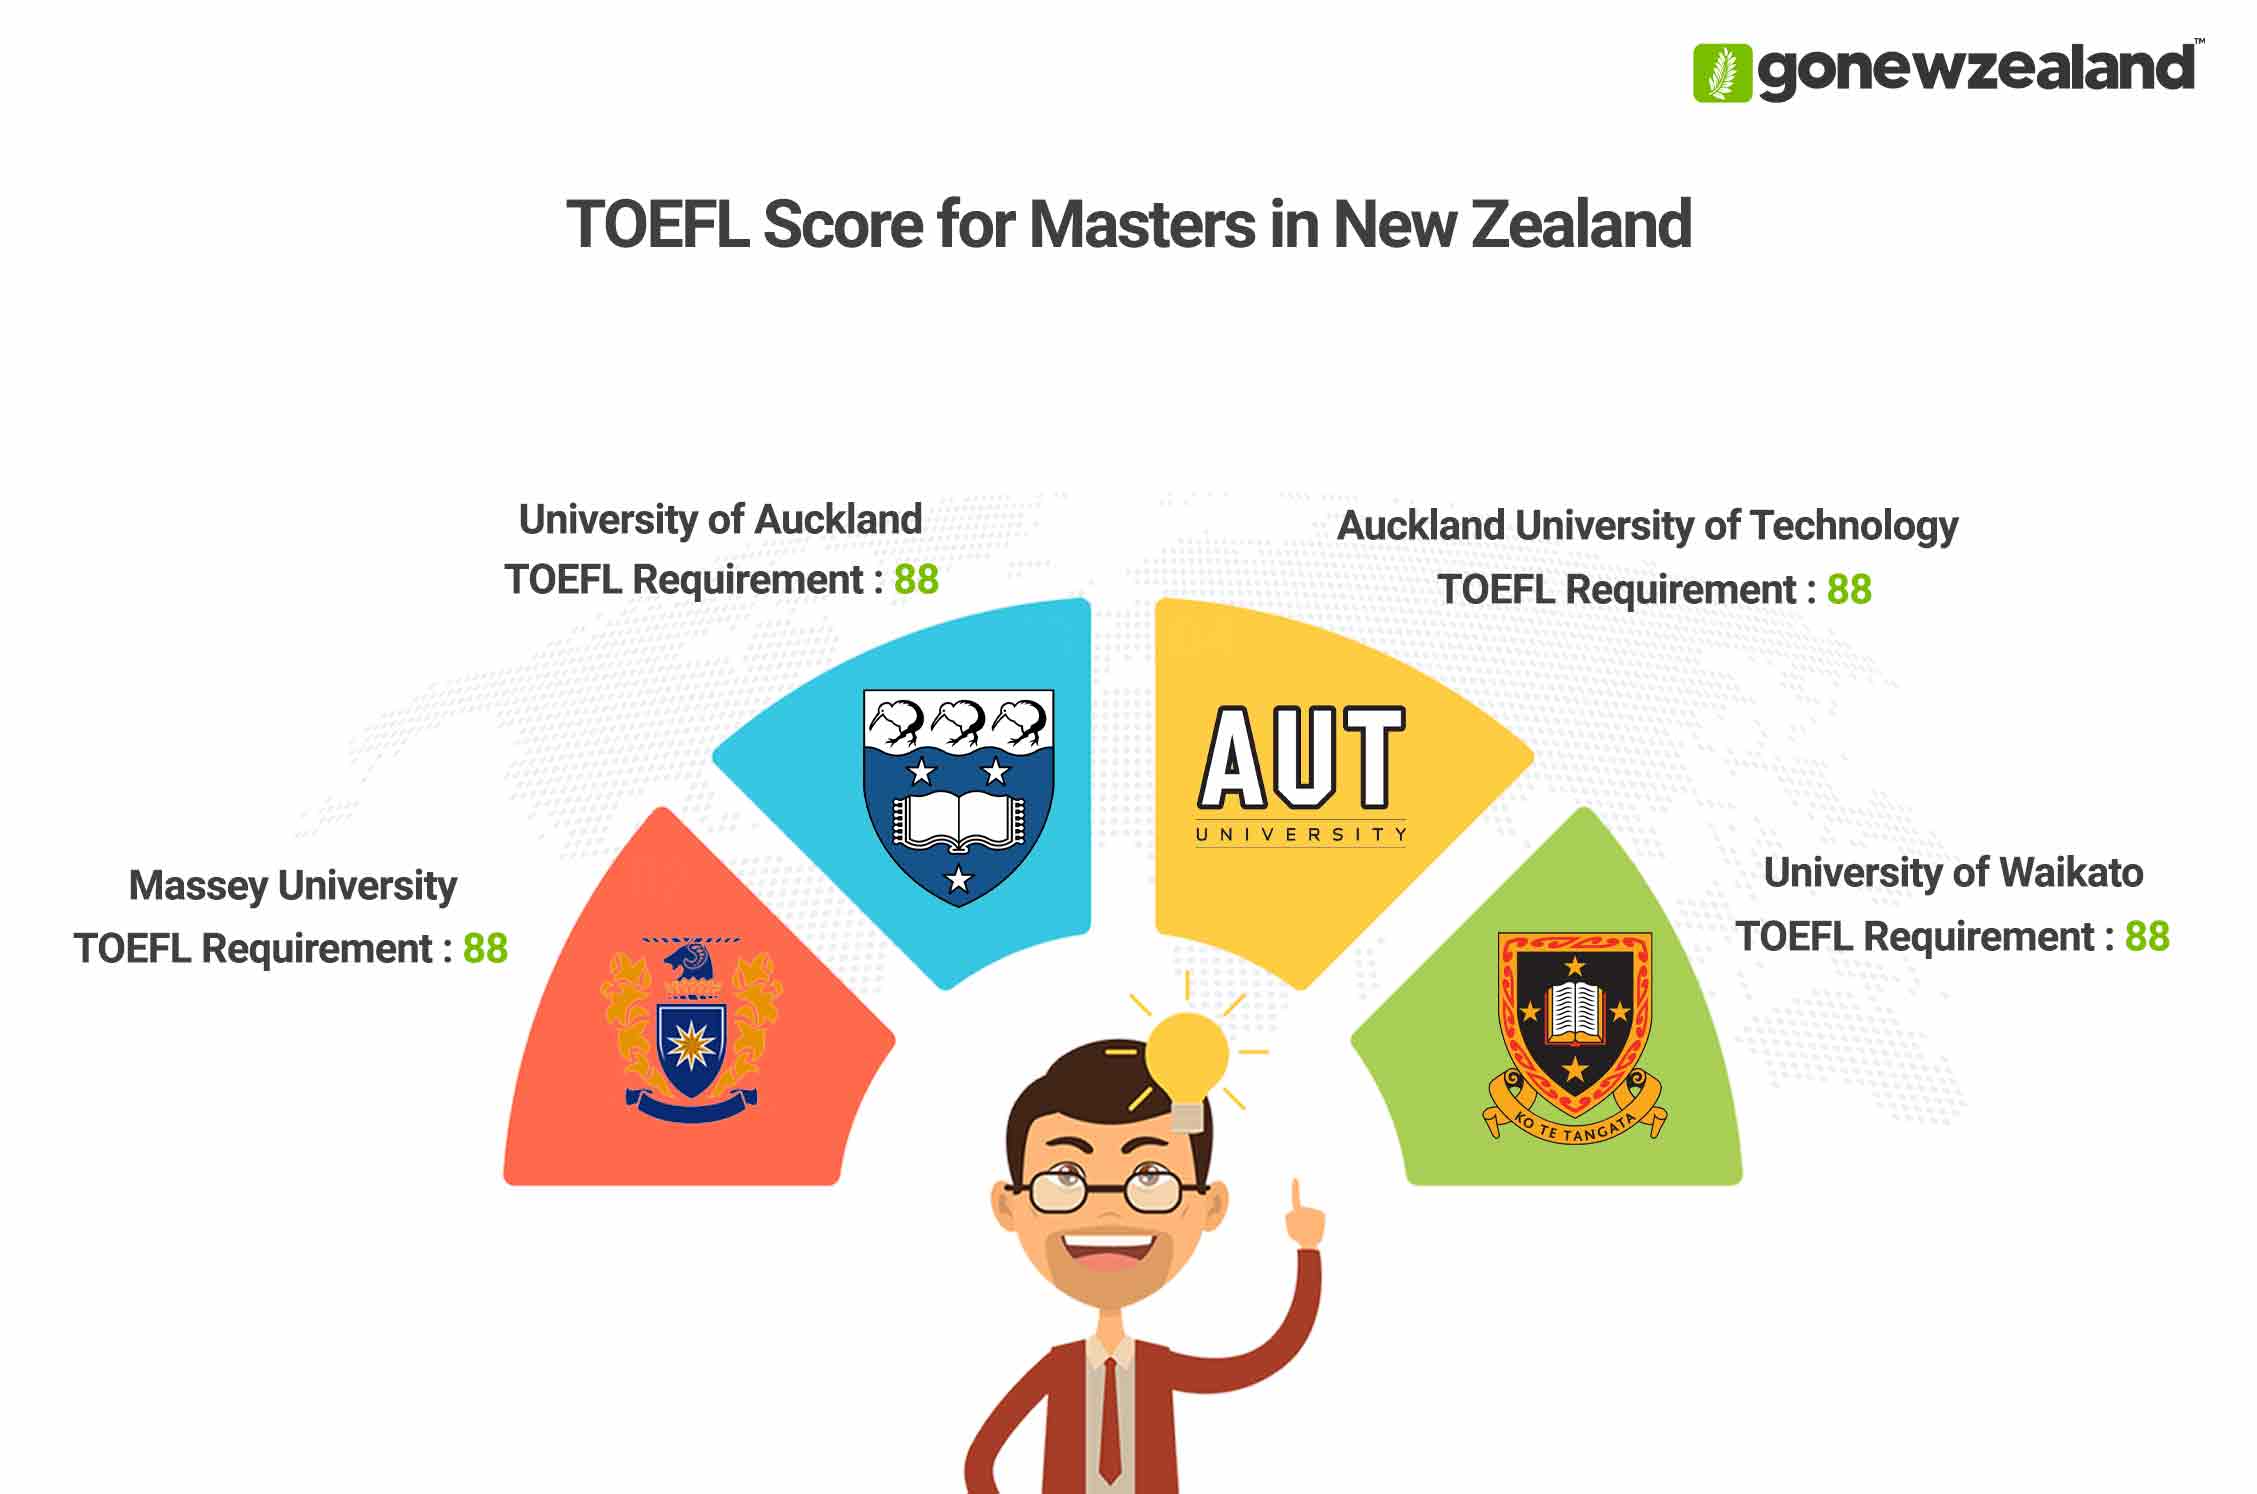 Masters in New Zealand TOEFL Score